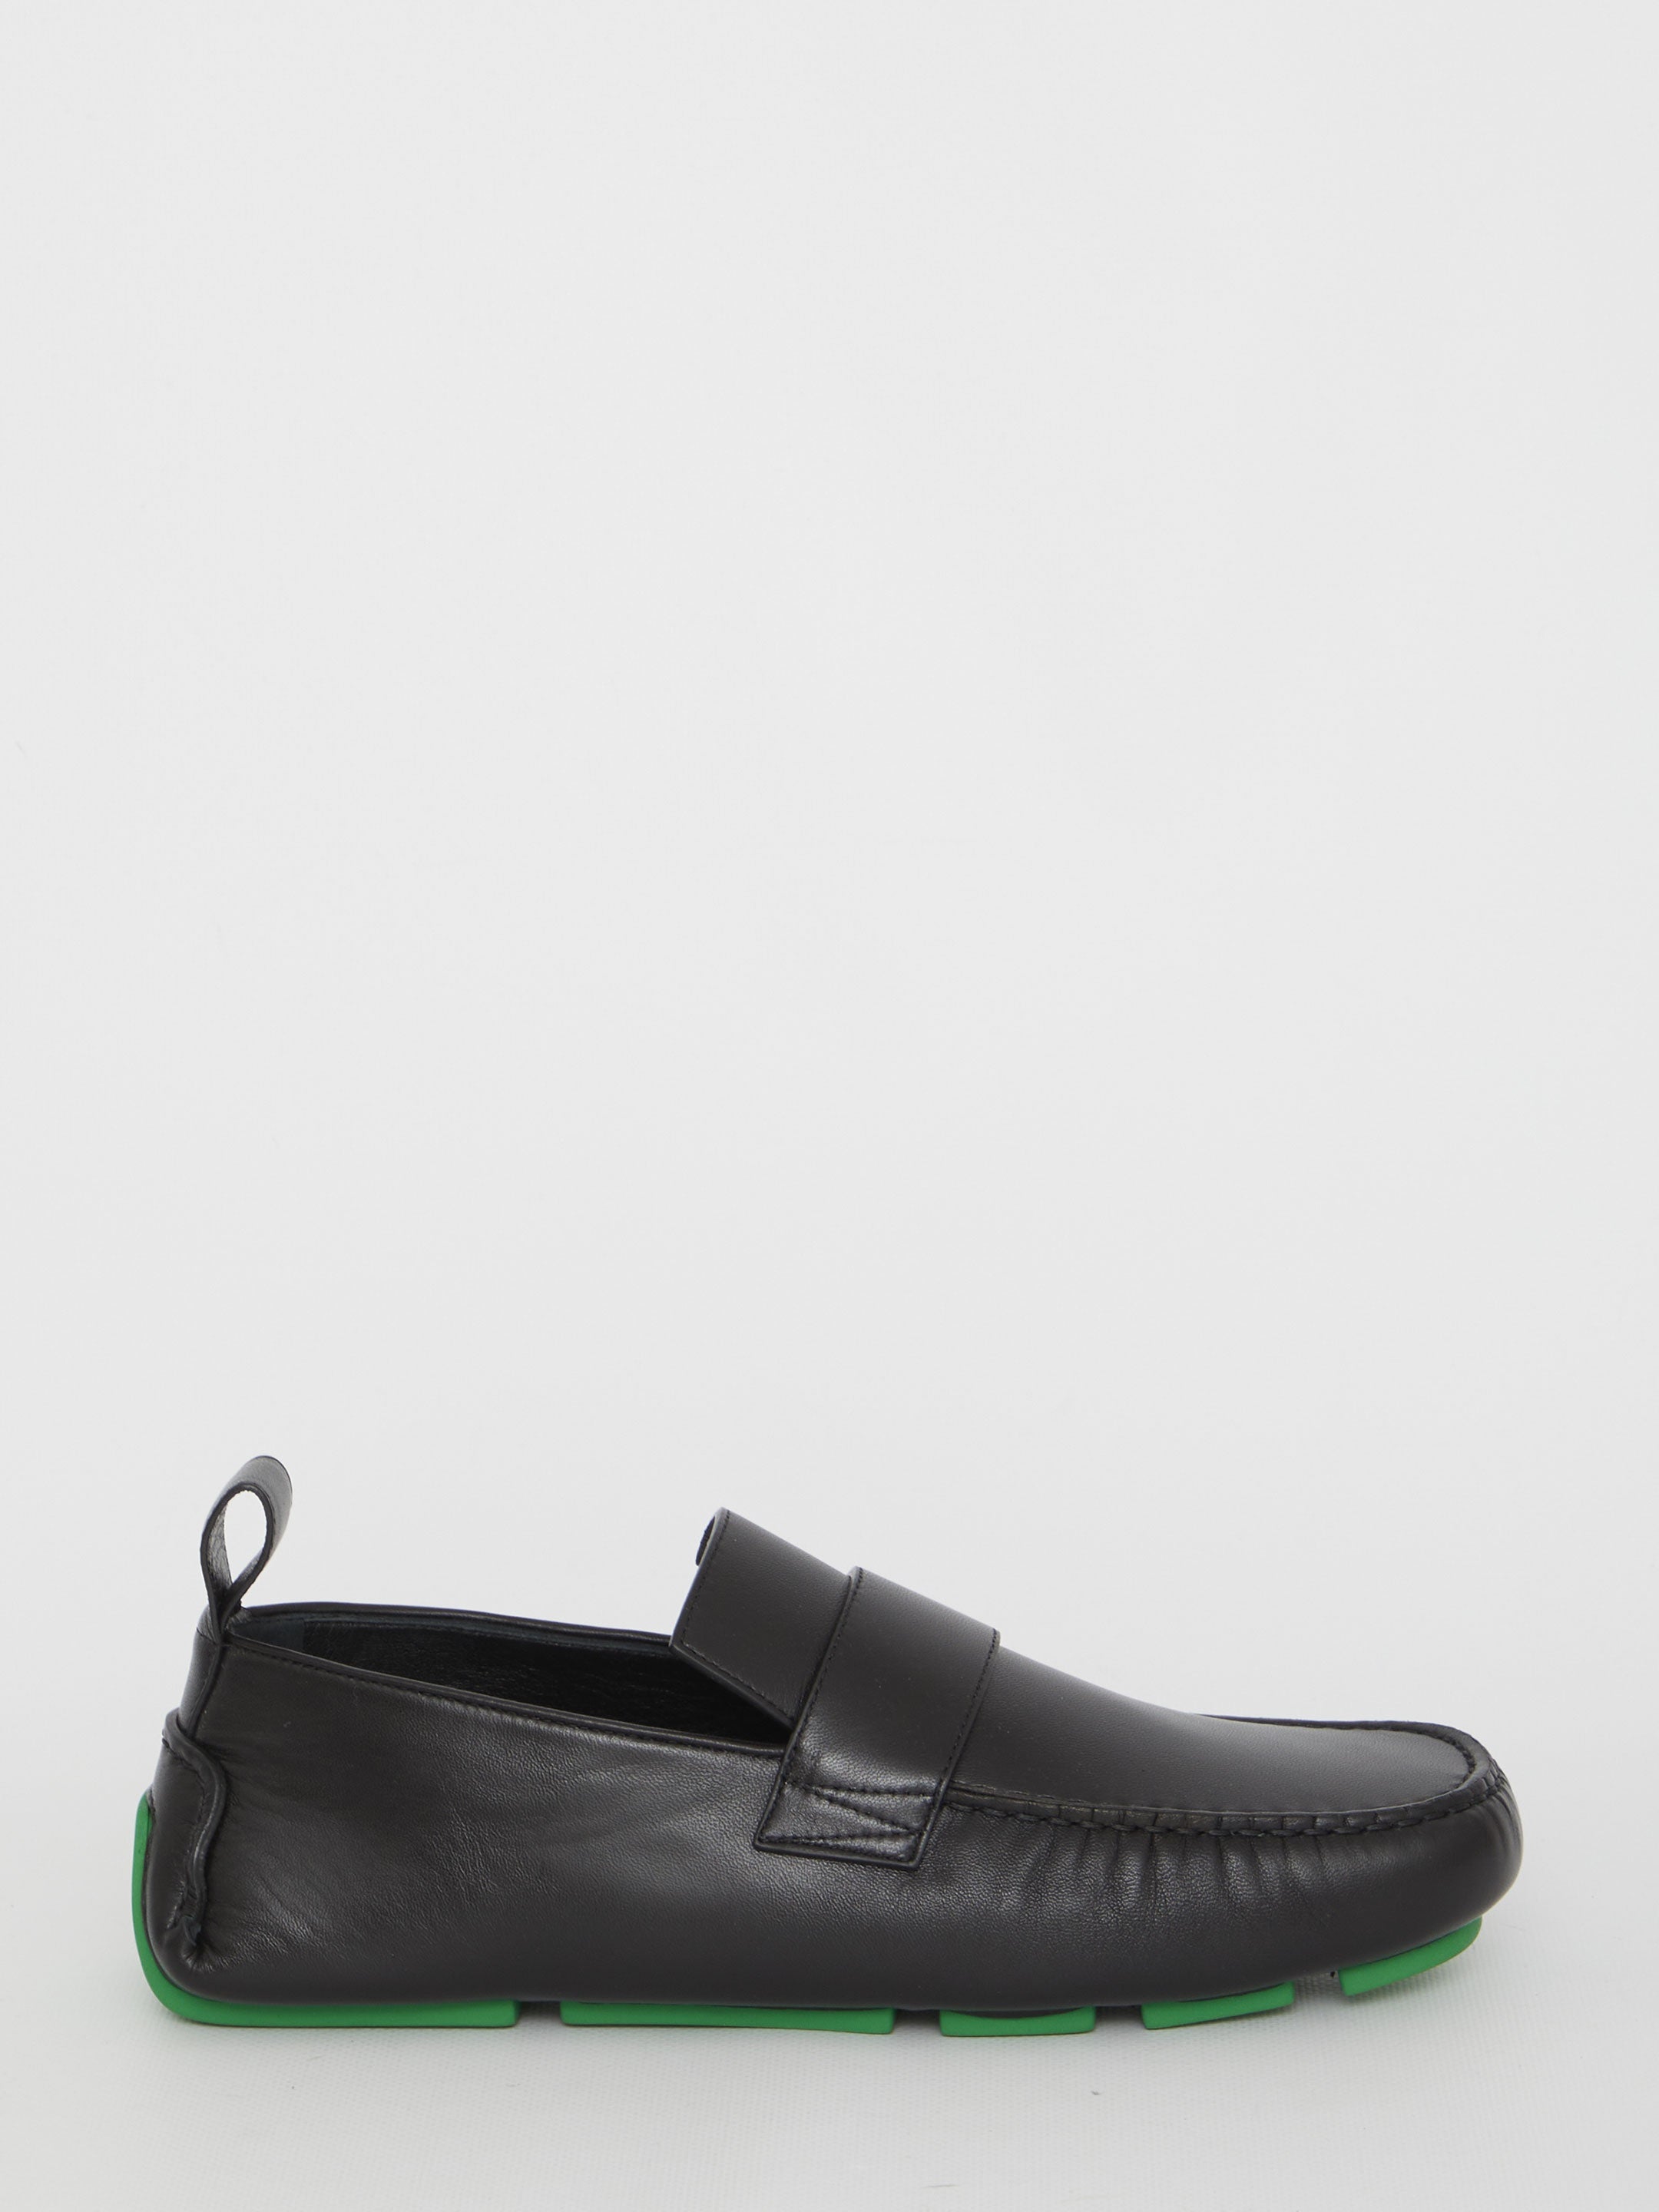 BOTTEGA-VENETA-OUTLET-SALE-Leather-loafers-Flache-Schuhe-41-BLACK-ARCHIVE-COLLECTION.jpg